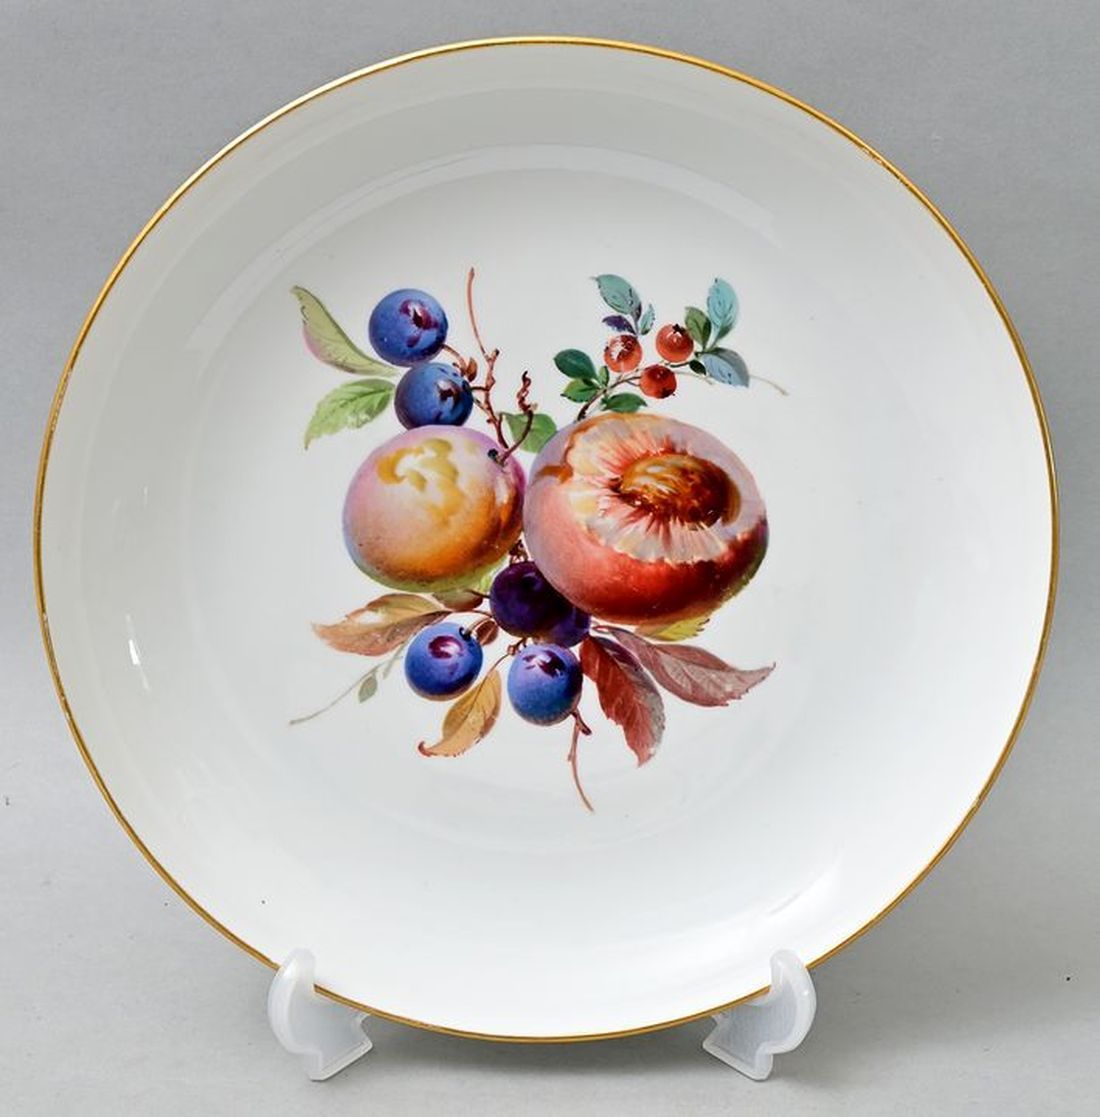 Null 圆碗，迈森，1924-33，瓷器，光滑的边缘形式，底部有水果画，金边。绘画部分减去泊。剑印。直径27厘米。 瓷碗，水果画，金边。迈森，1924-33，&hellip;